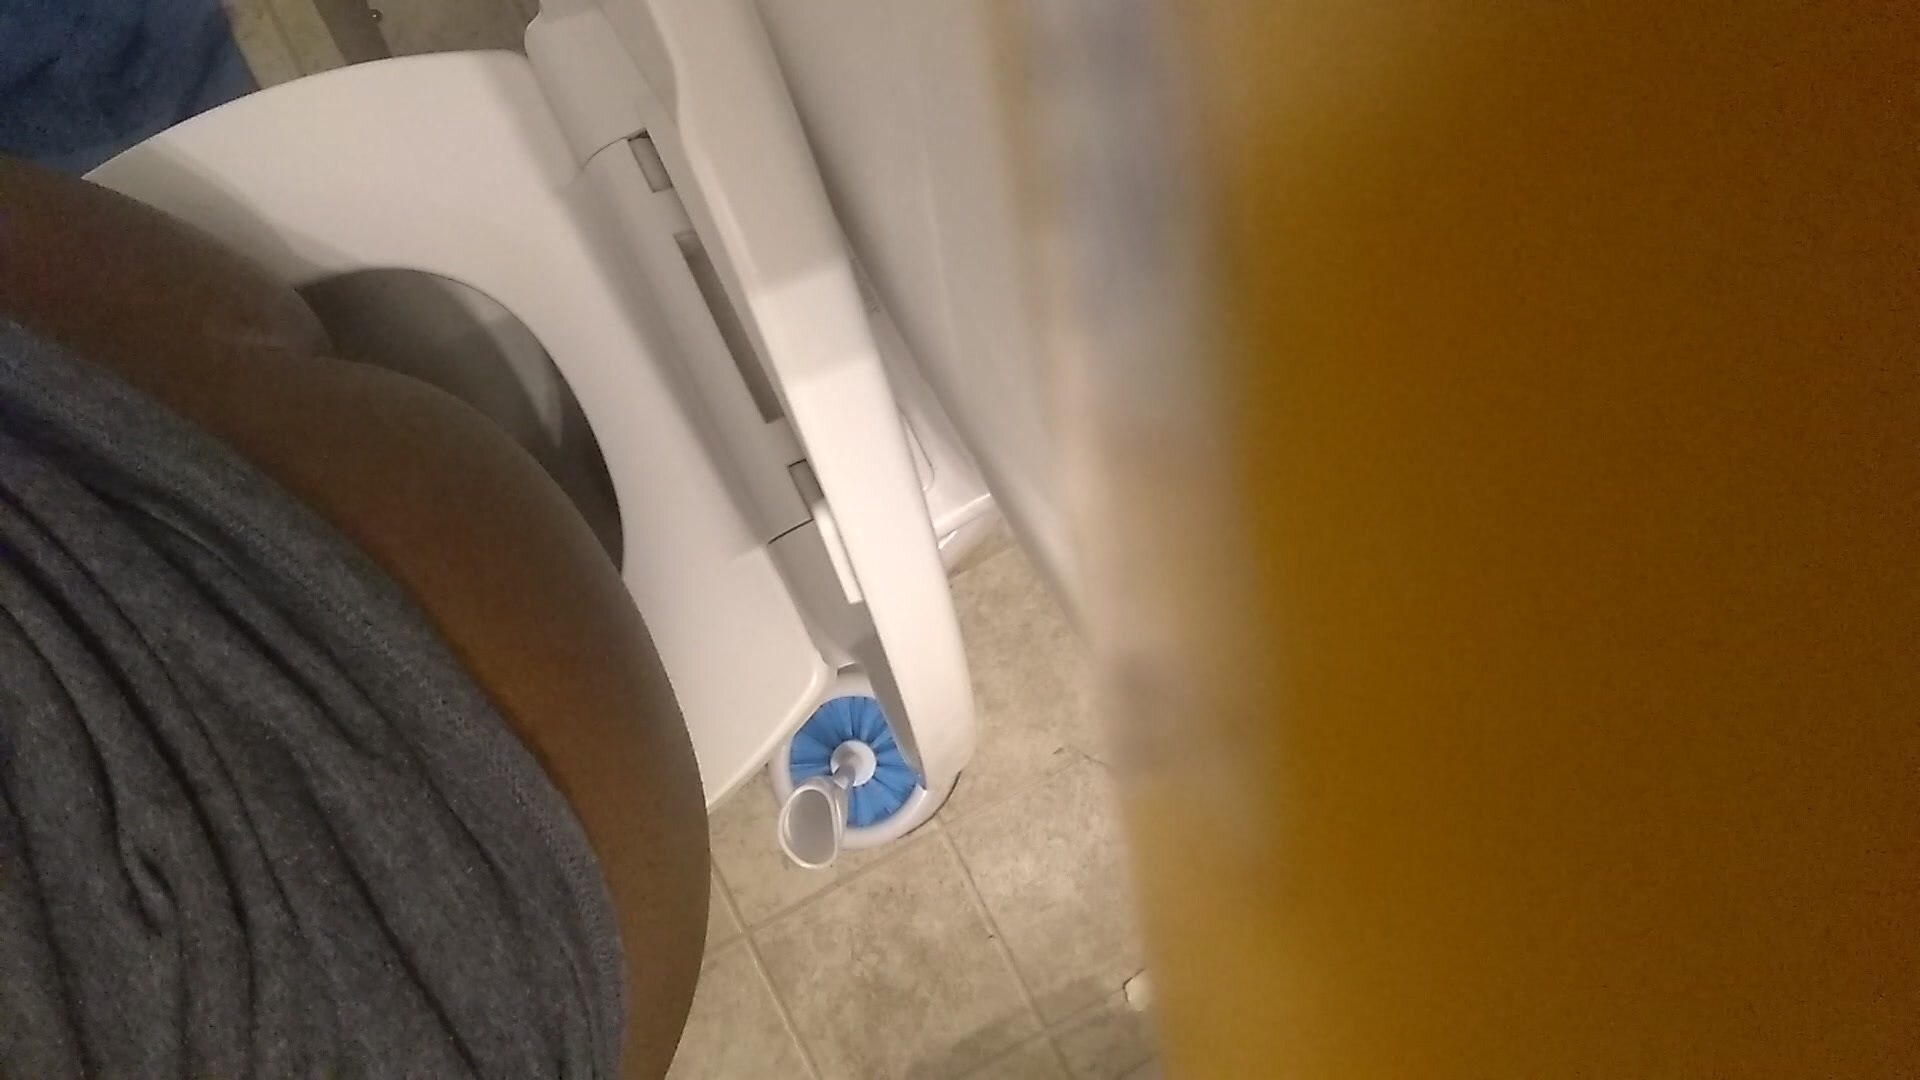 Black ass on toilet - video 3